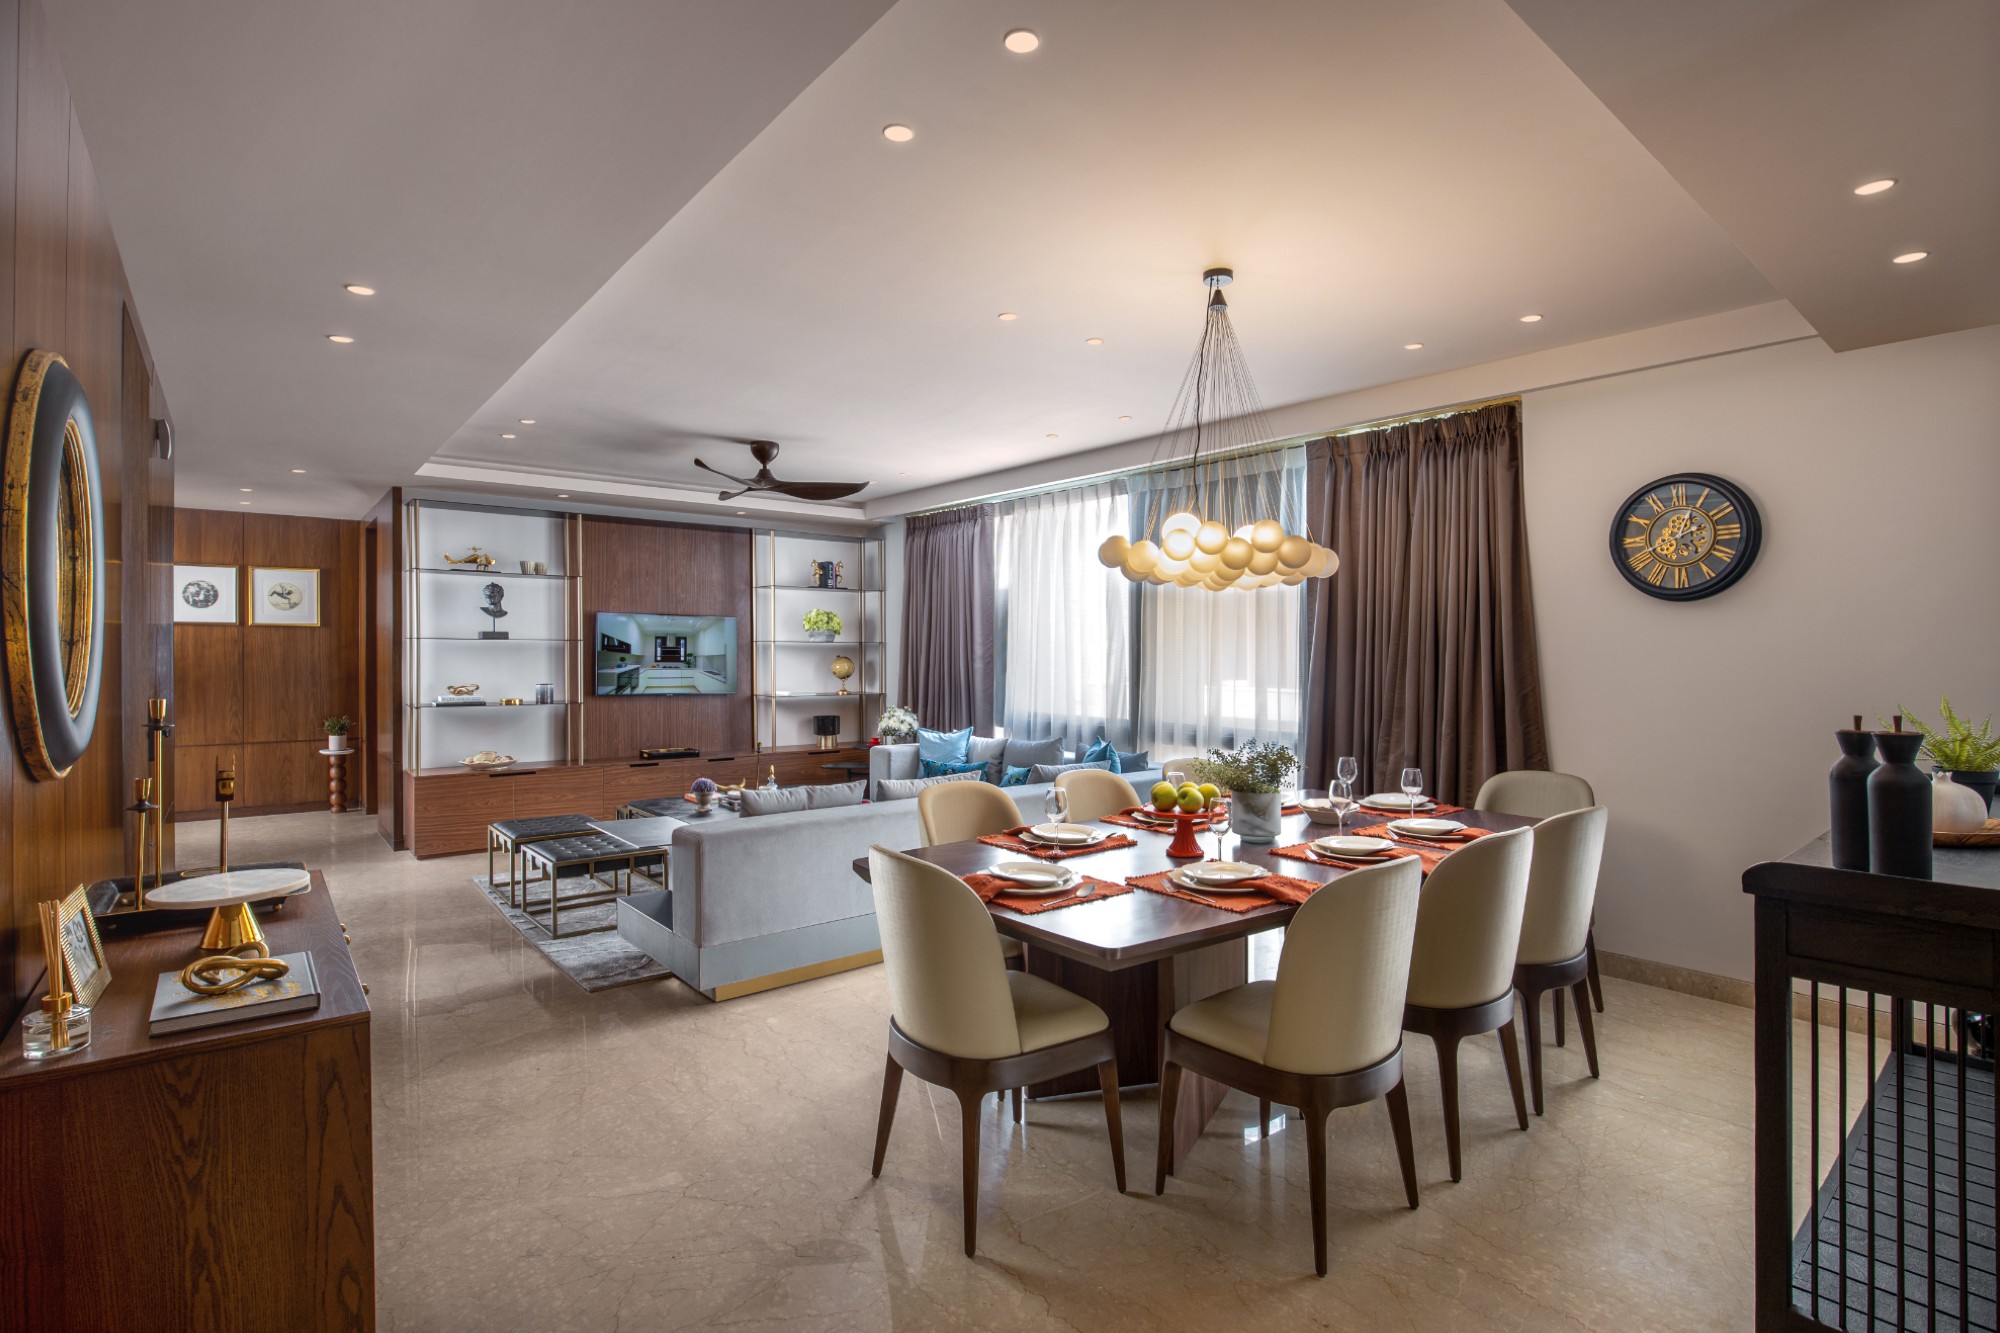 Luxury dining spaces by Pramod Group